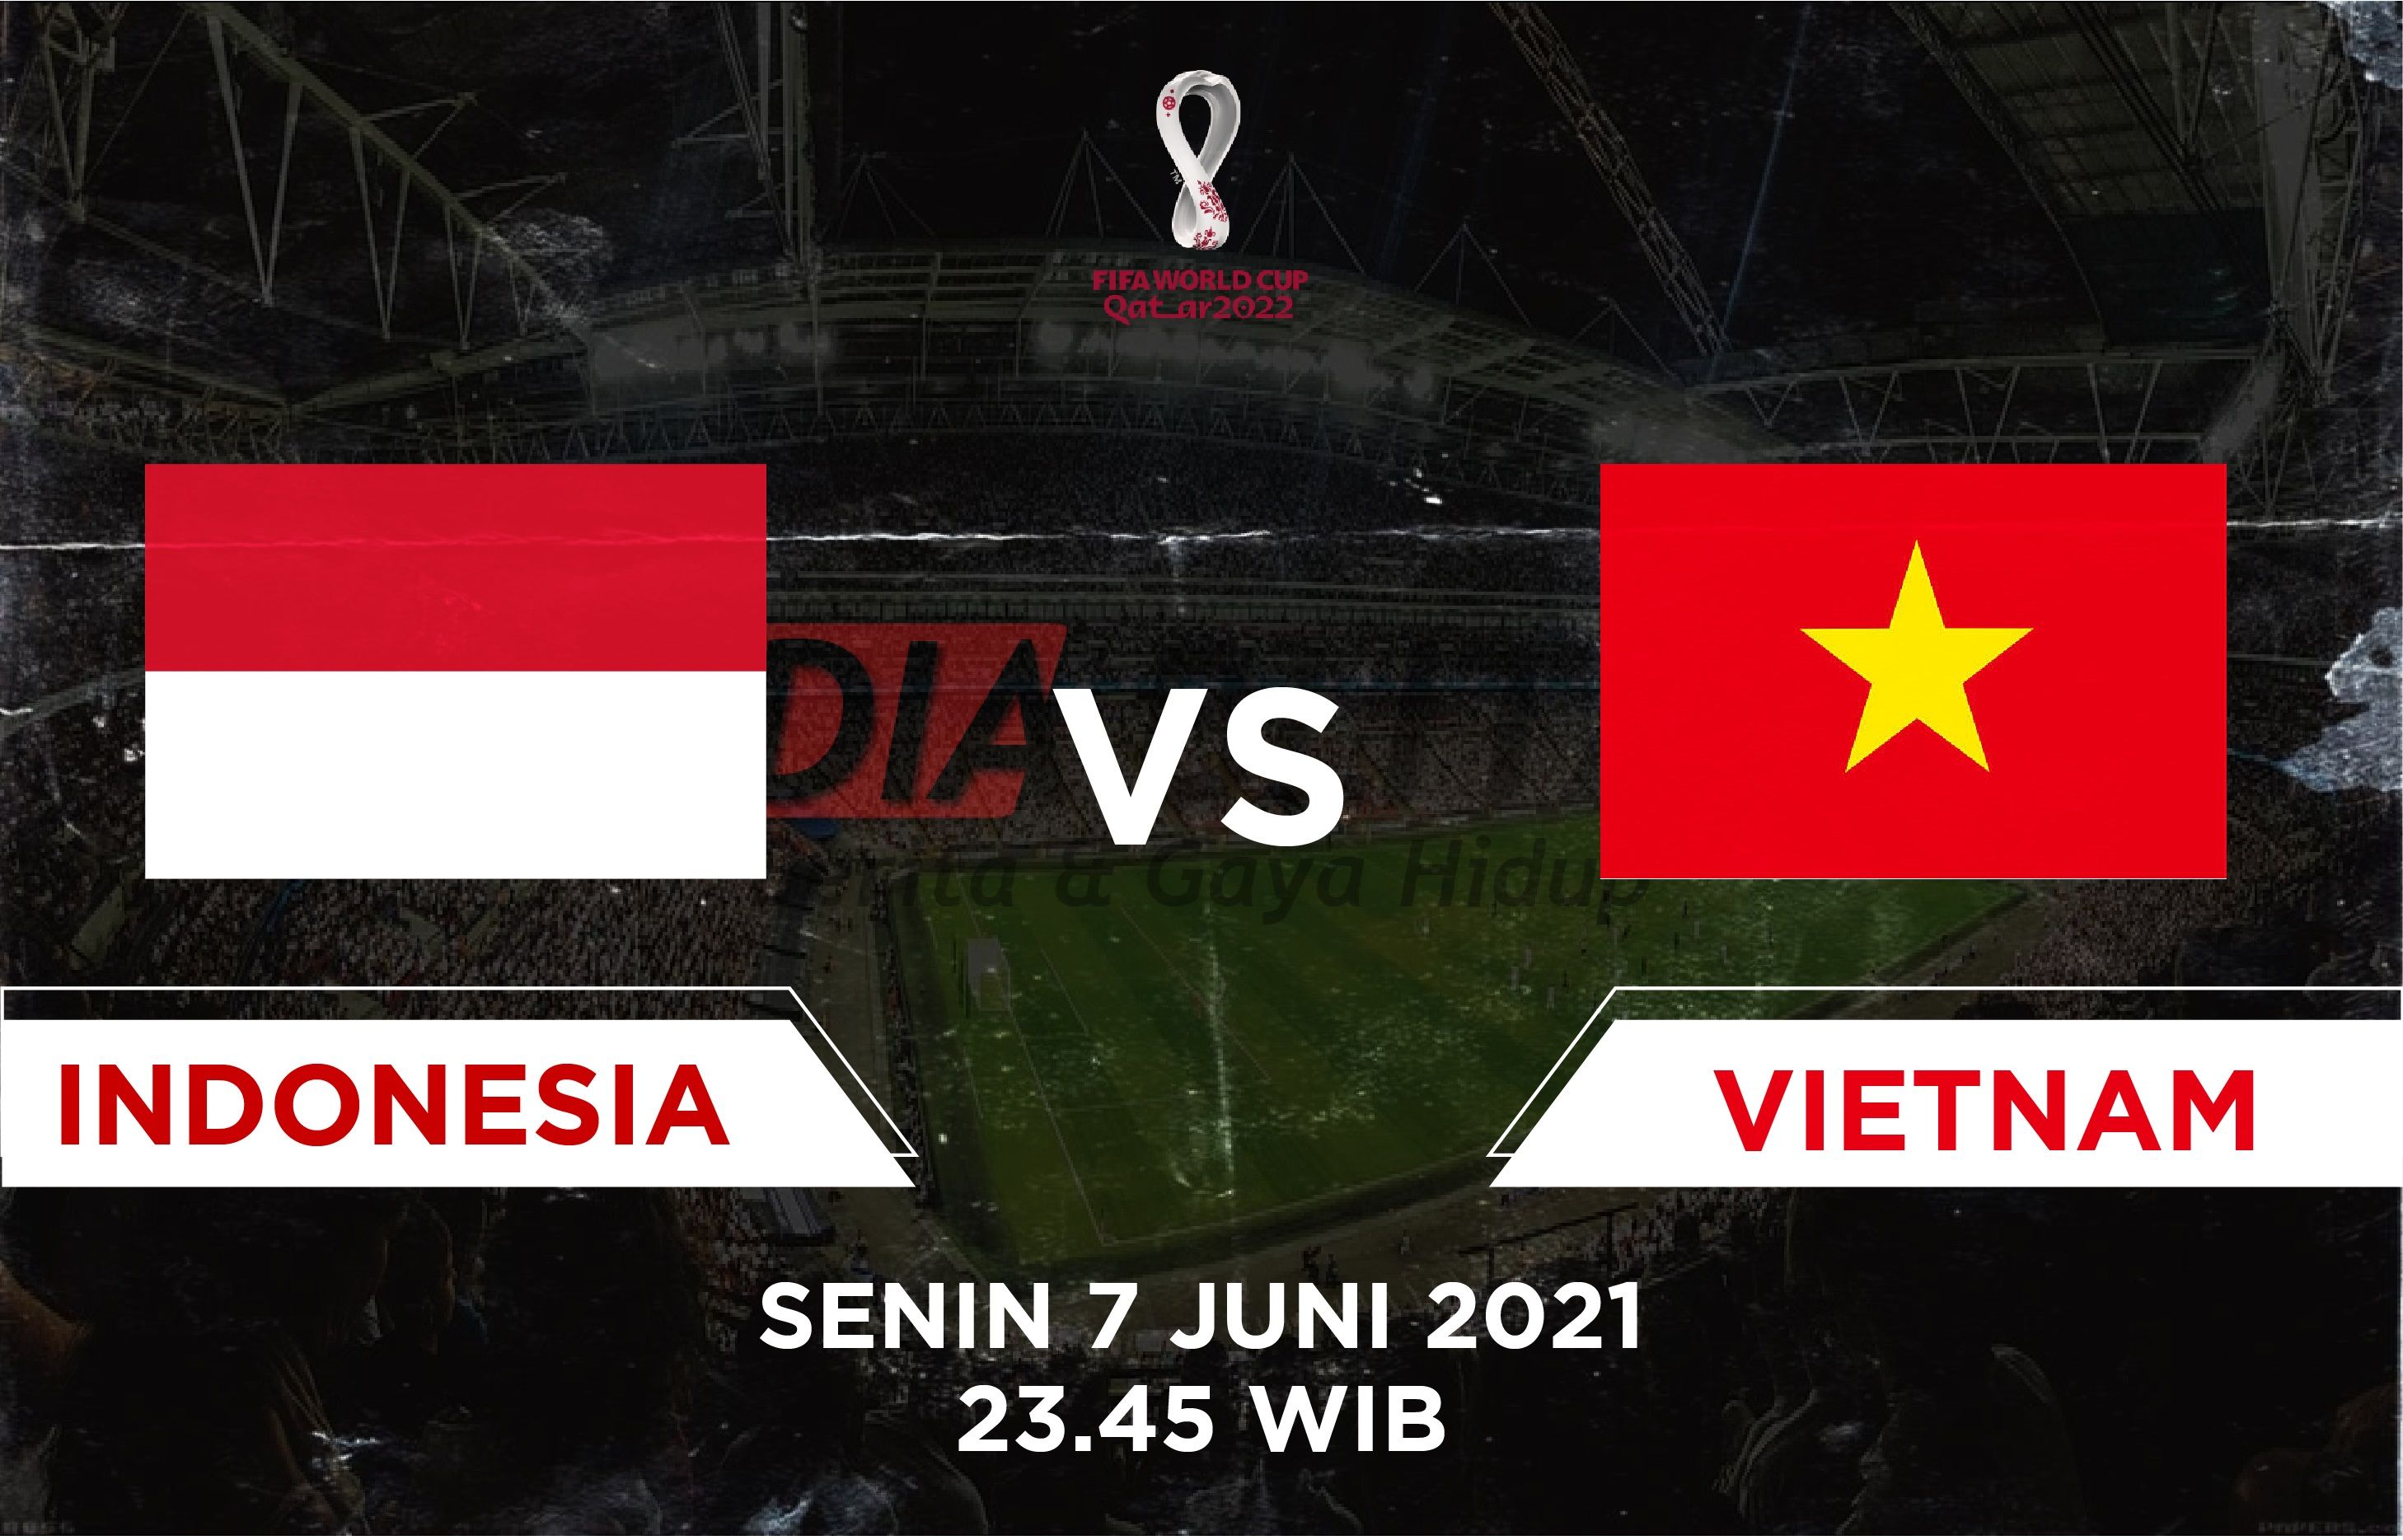 Indonesia vs vietnam live streaming bola. Vietnam vs Indonesia. Live streaming Indonesia vs Vietnam. Индонезия Live стримы продажи.